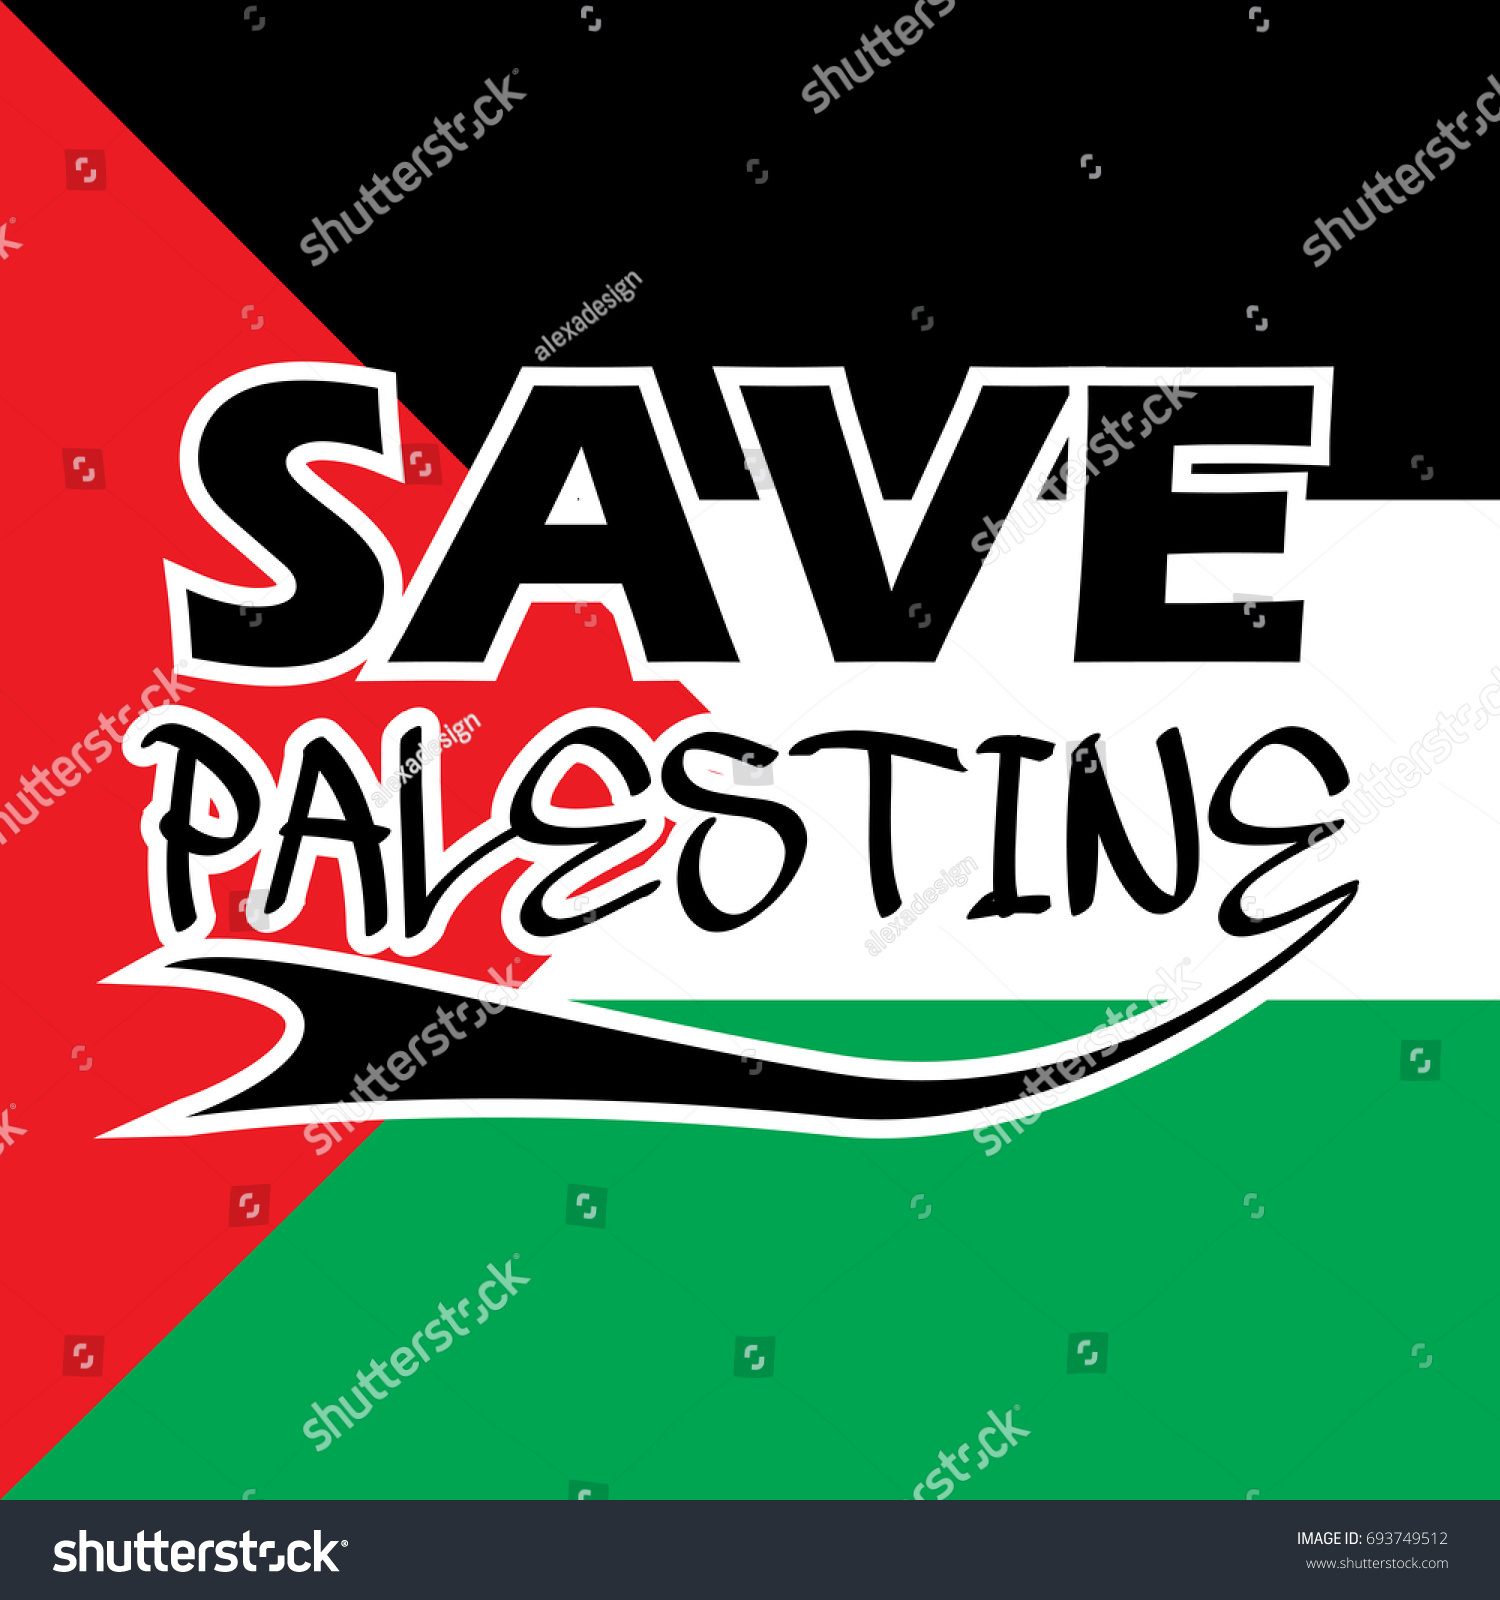 Save palestine malaysia